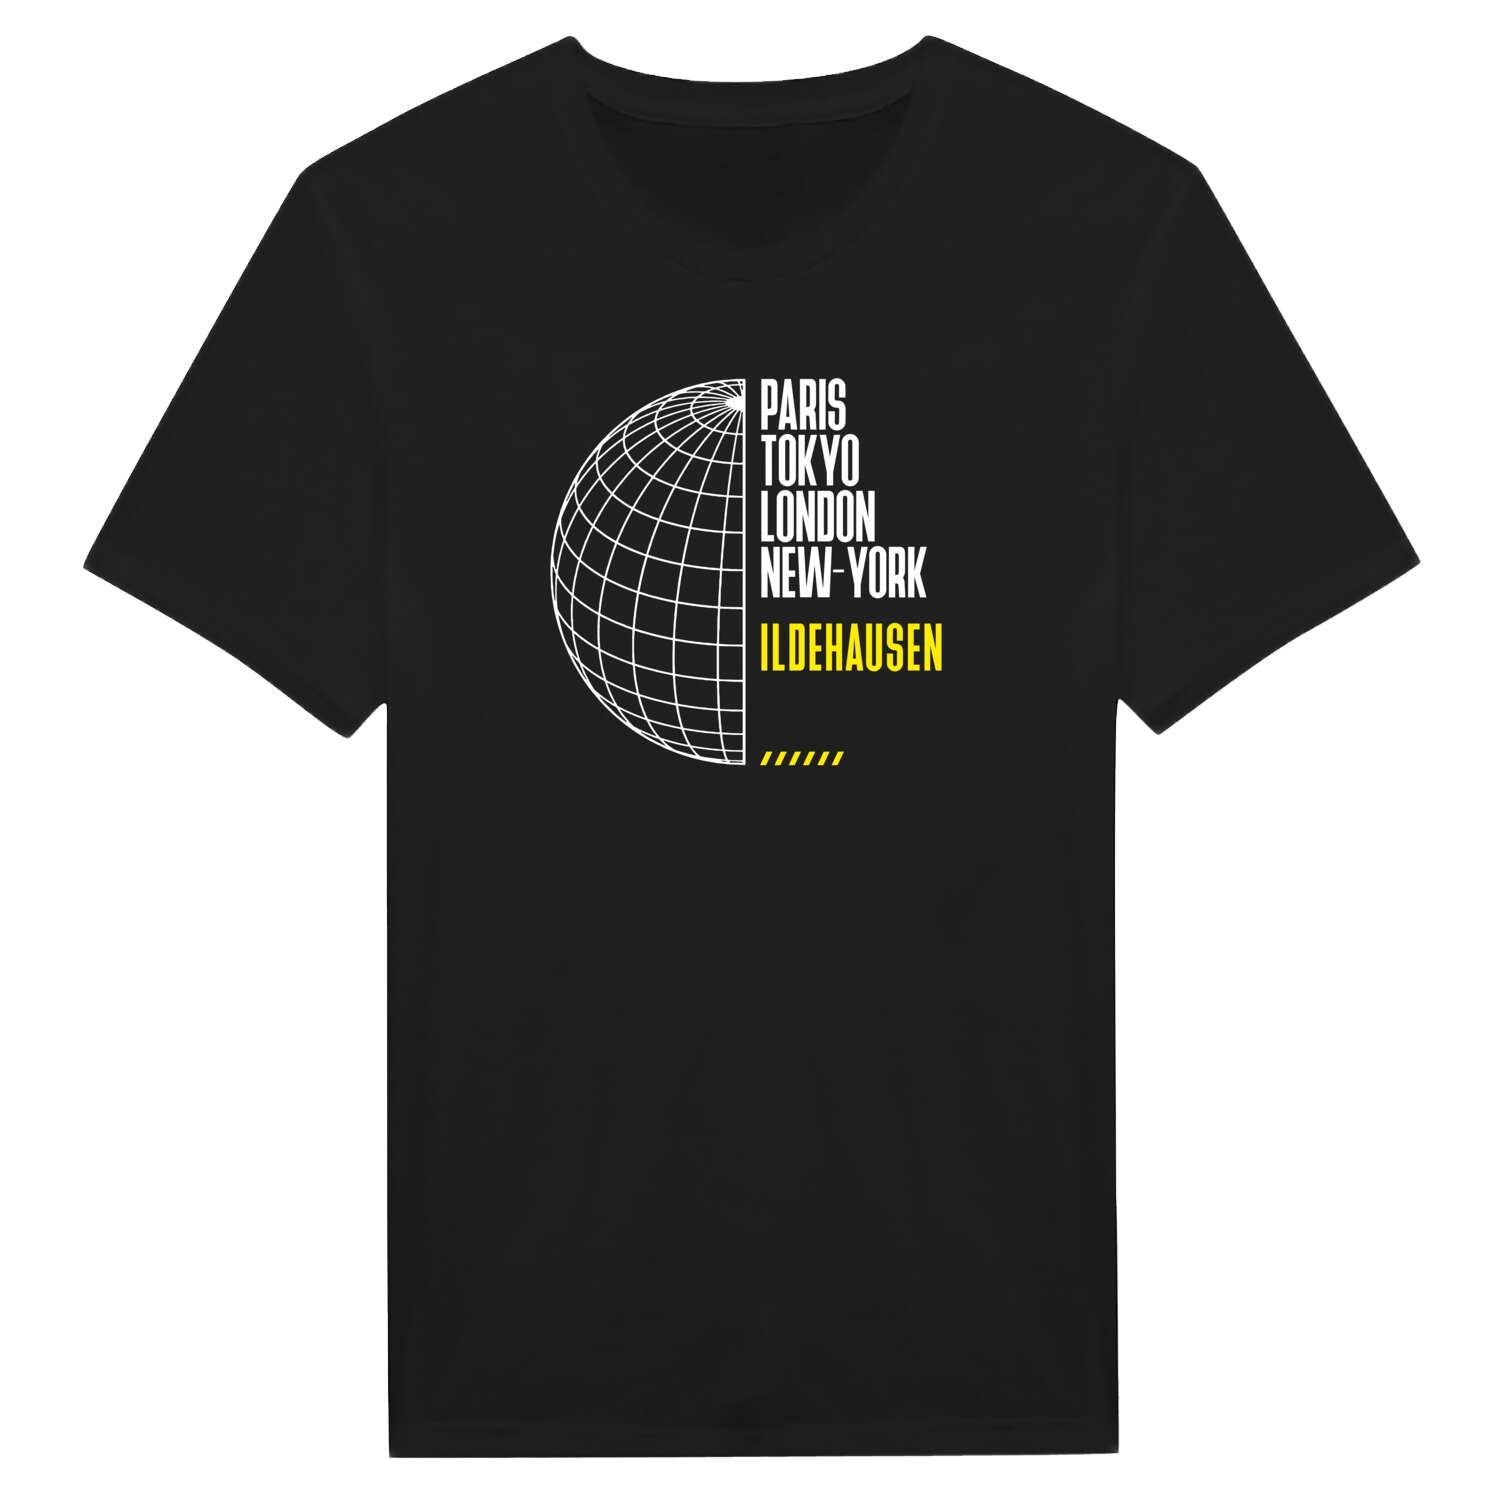 Ildehausen T-Shirt »Paris Tokyo London«